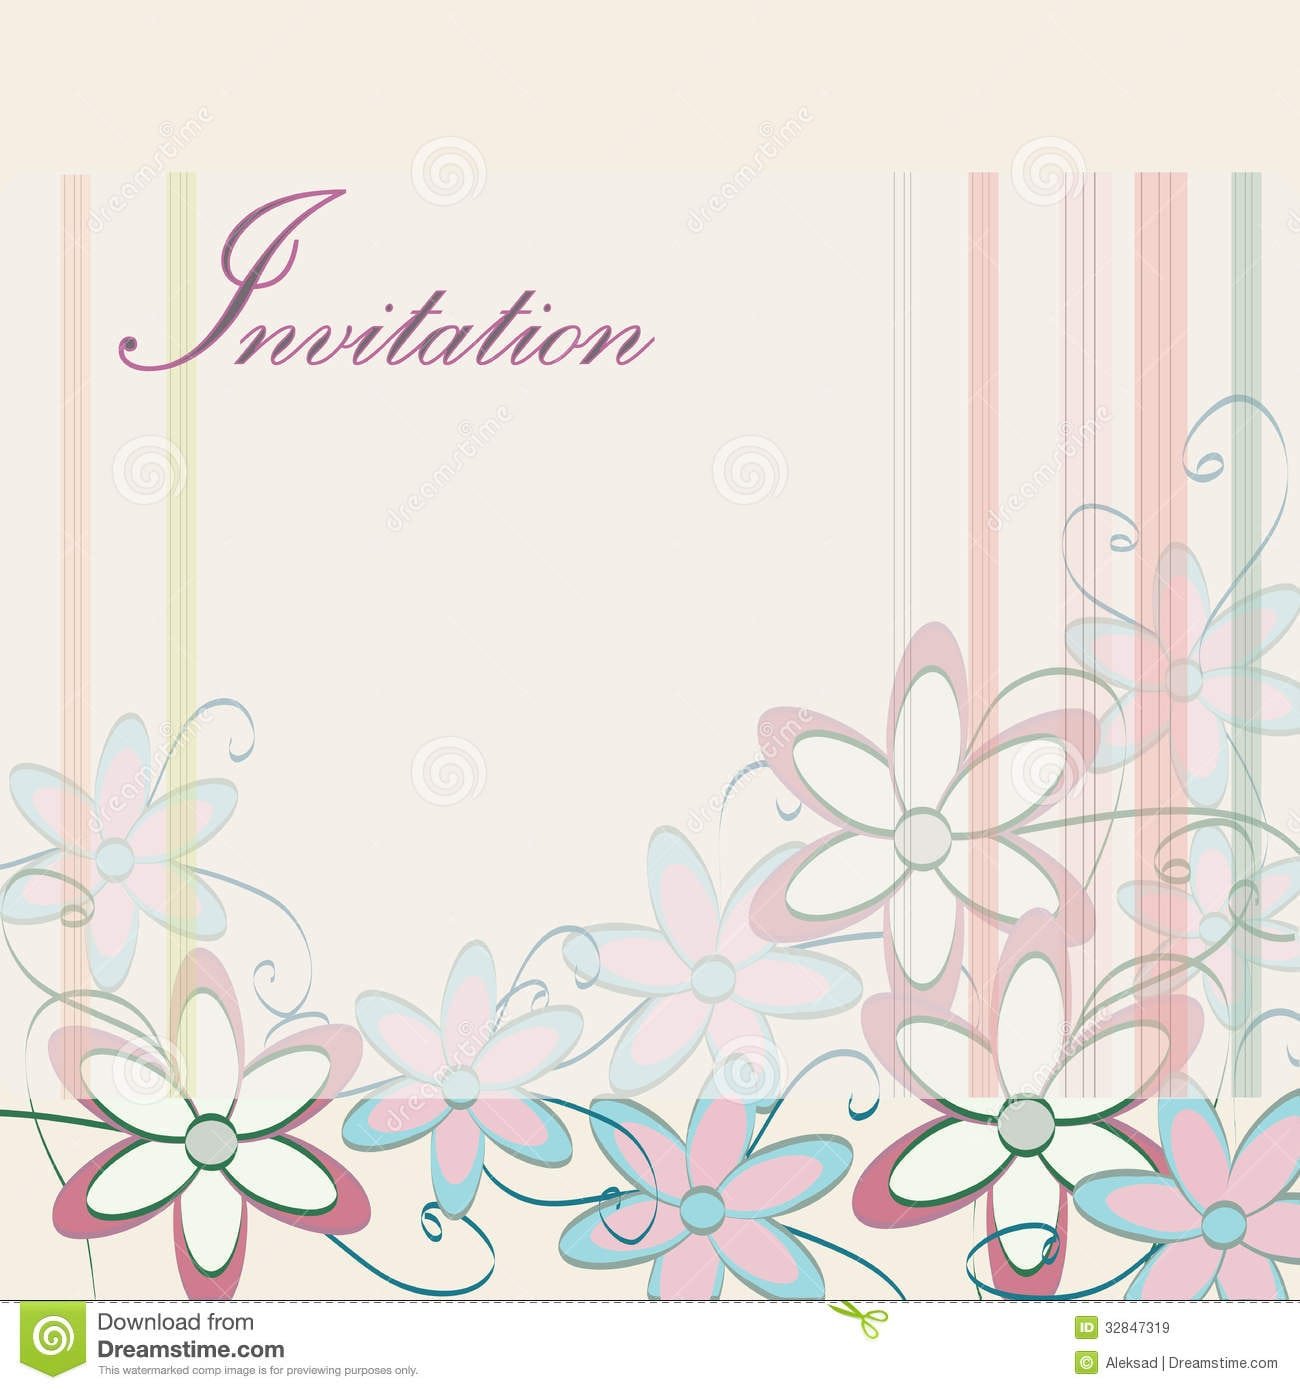 invitation-card-template-free-download